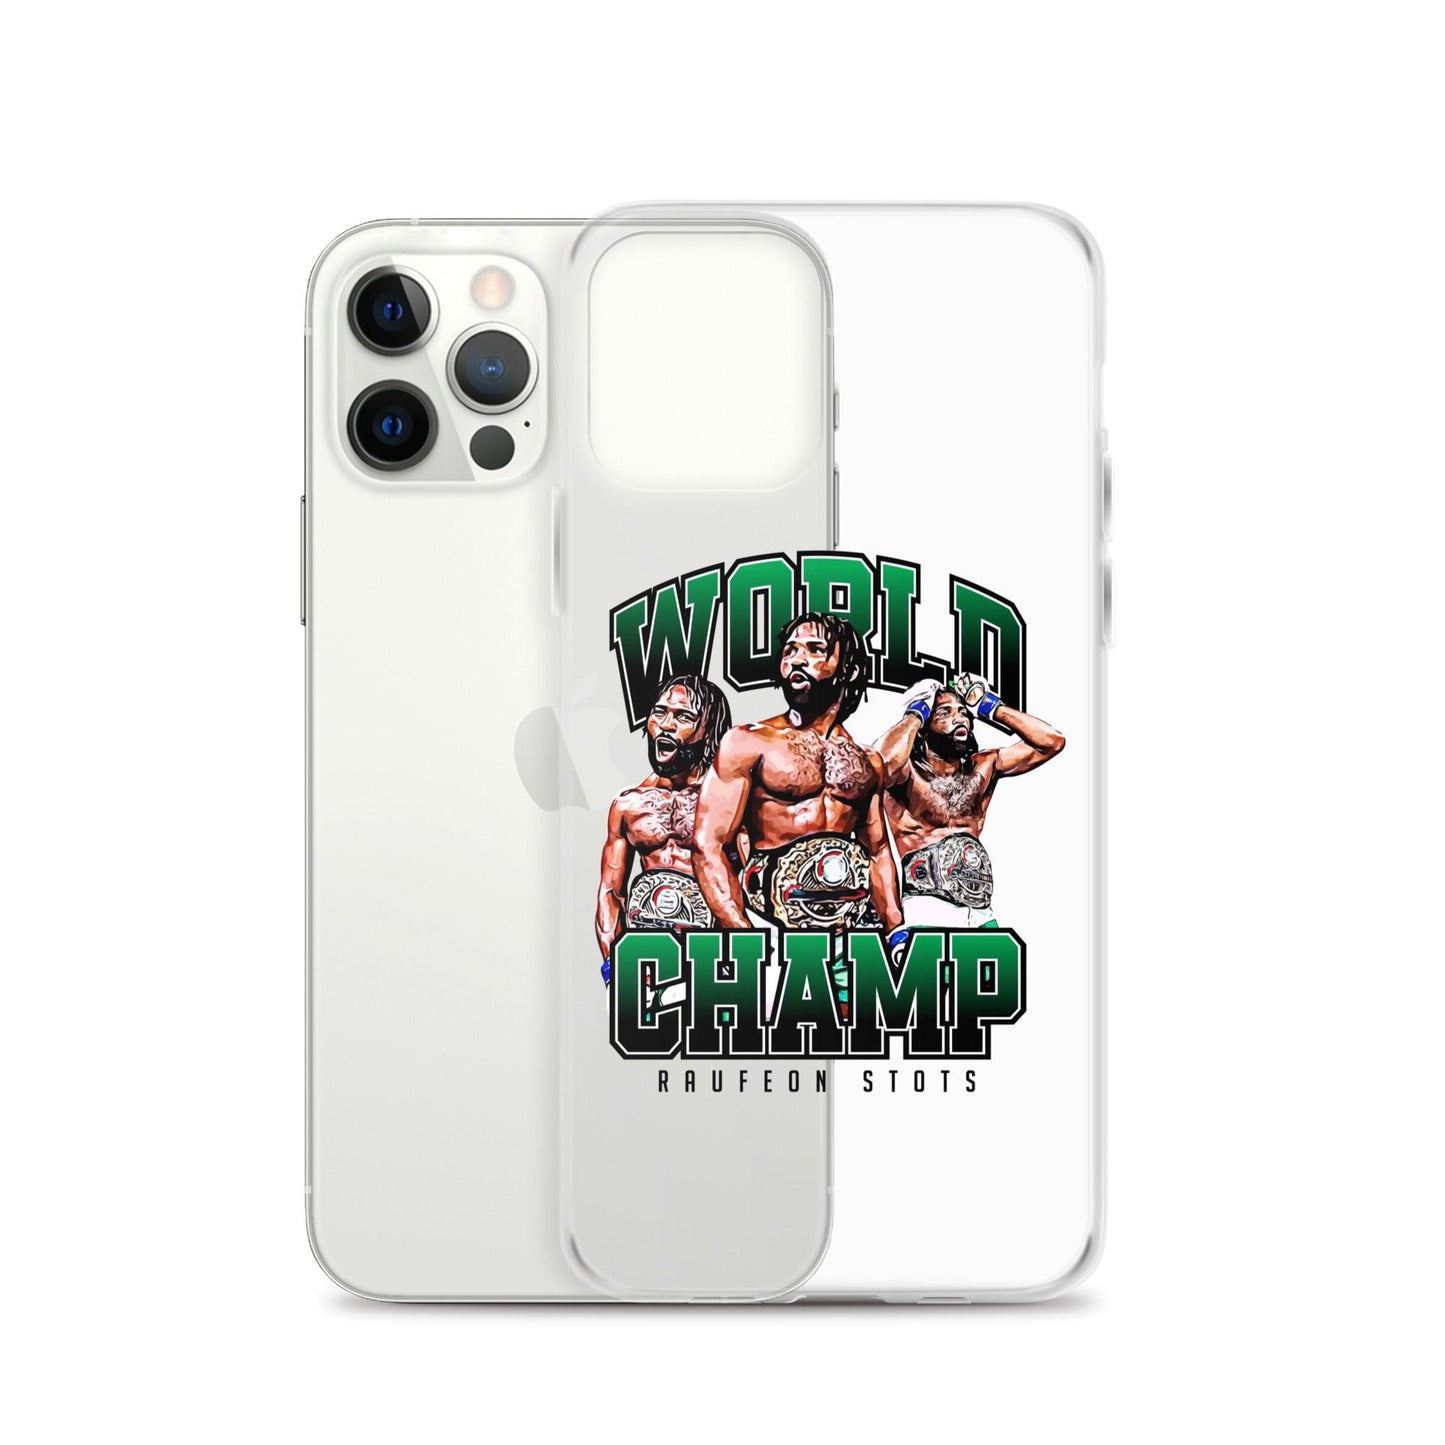 Raufeon Stots "World Champ" iPhone Case - Fan Arch